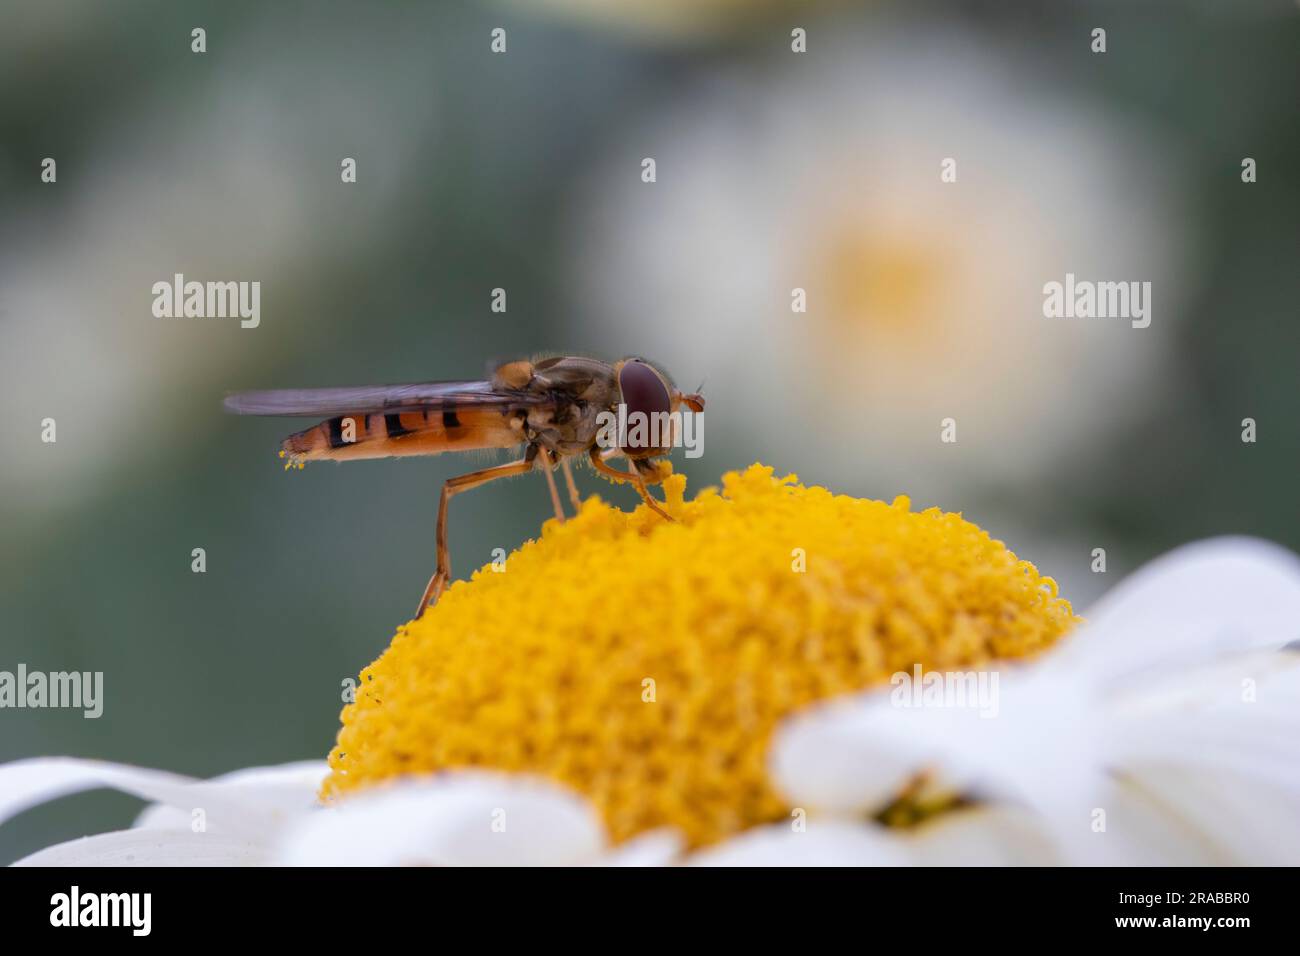 Closeup image of a Hoverfly on Anthemis tinctoria ‘E.C.Buxton’ Stock Photo